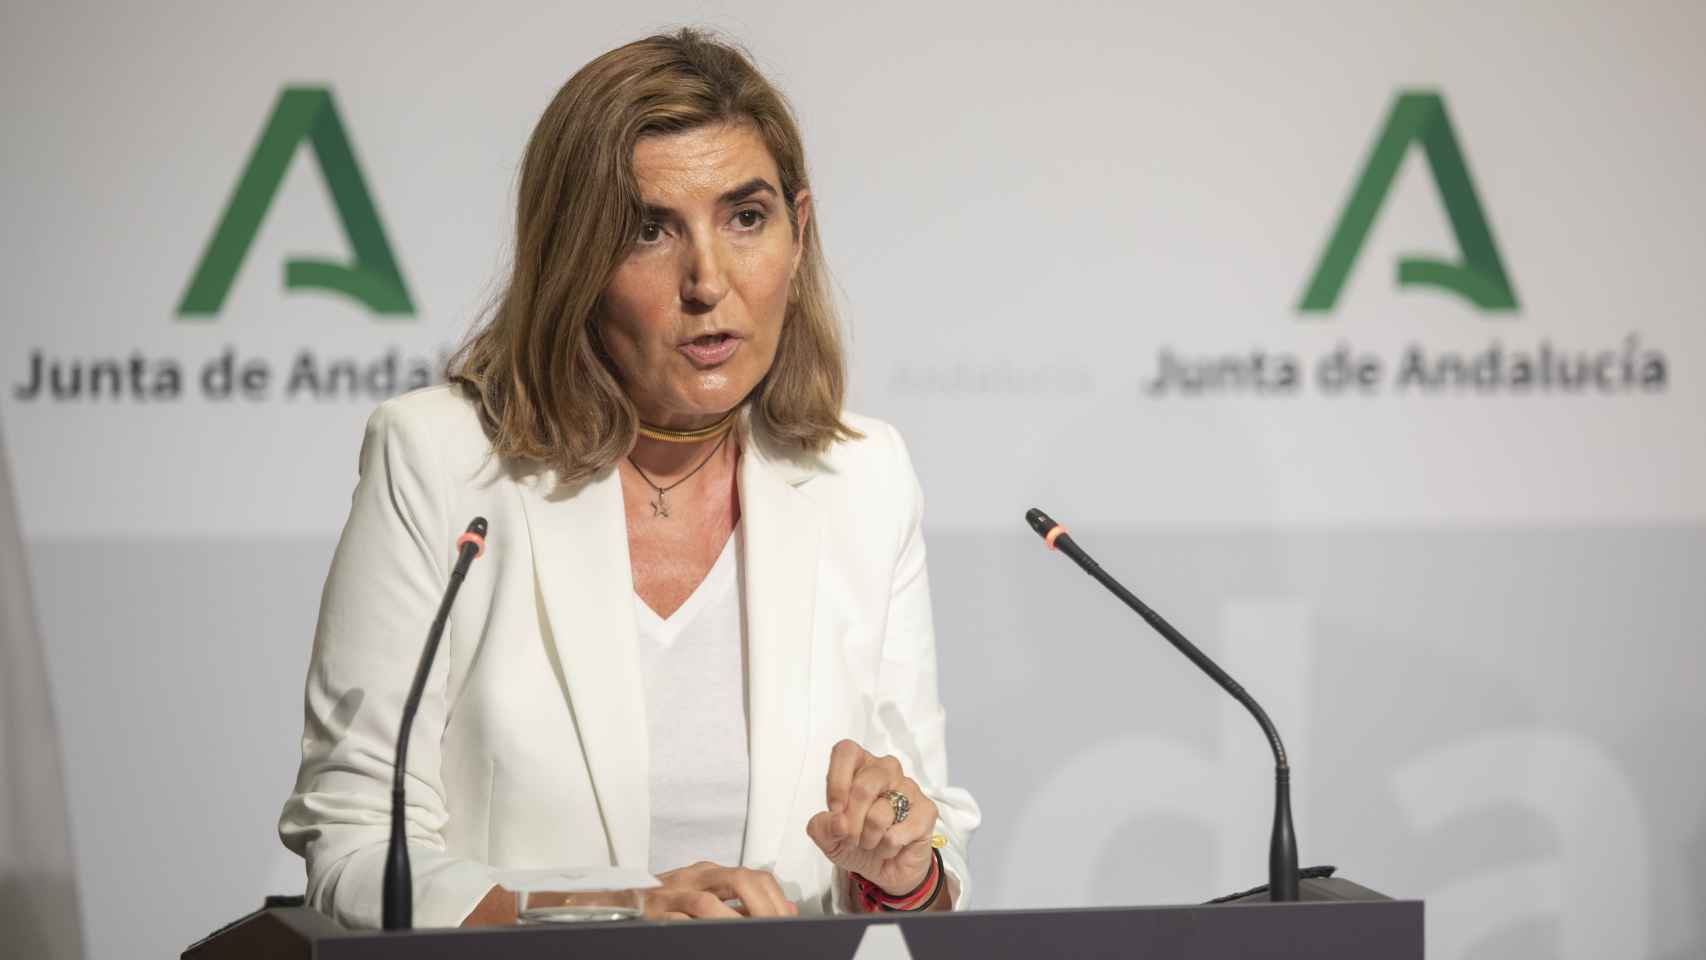 Feijóo ficha a Rocío Blanco, ex consejera andaluza de Cs, para la dirección nacional del PP thumbnail